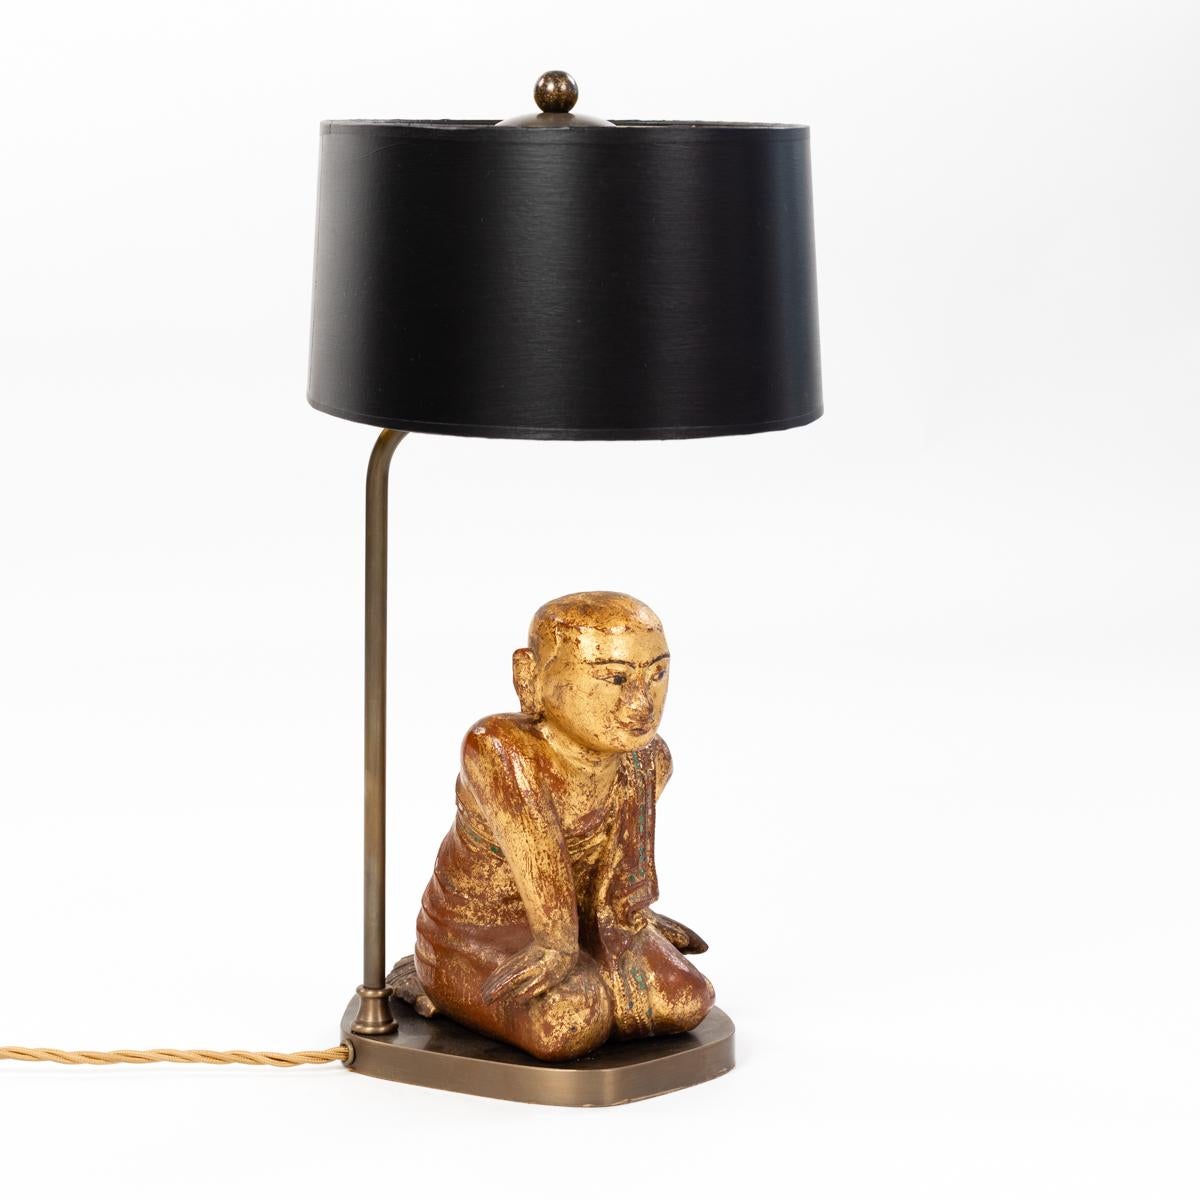 sitting wooden lamp